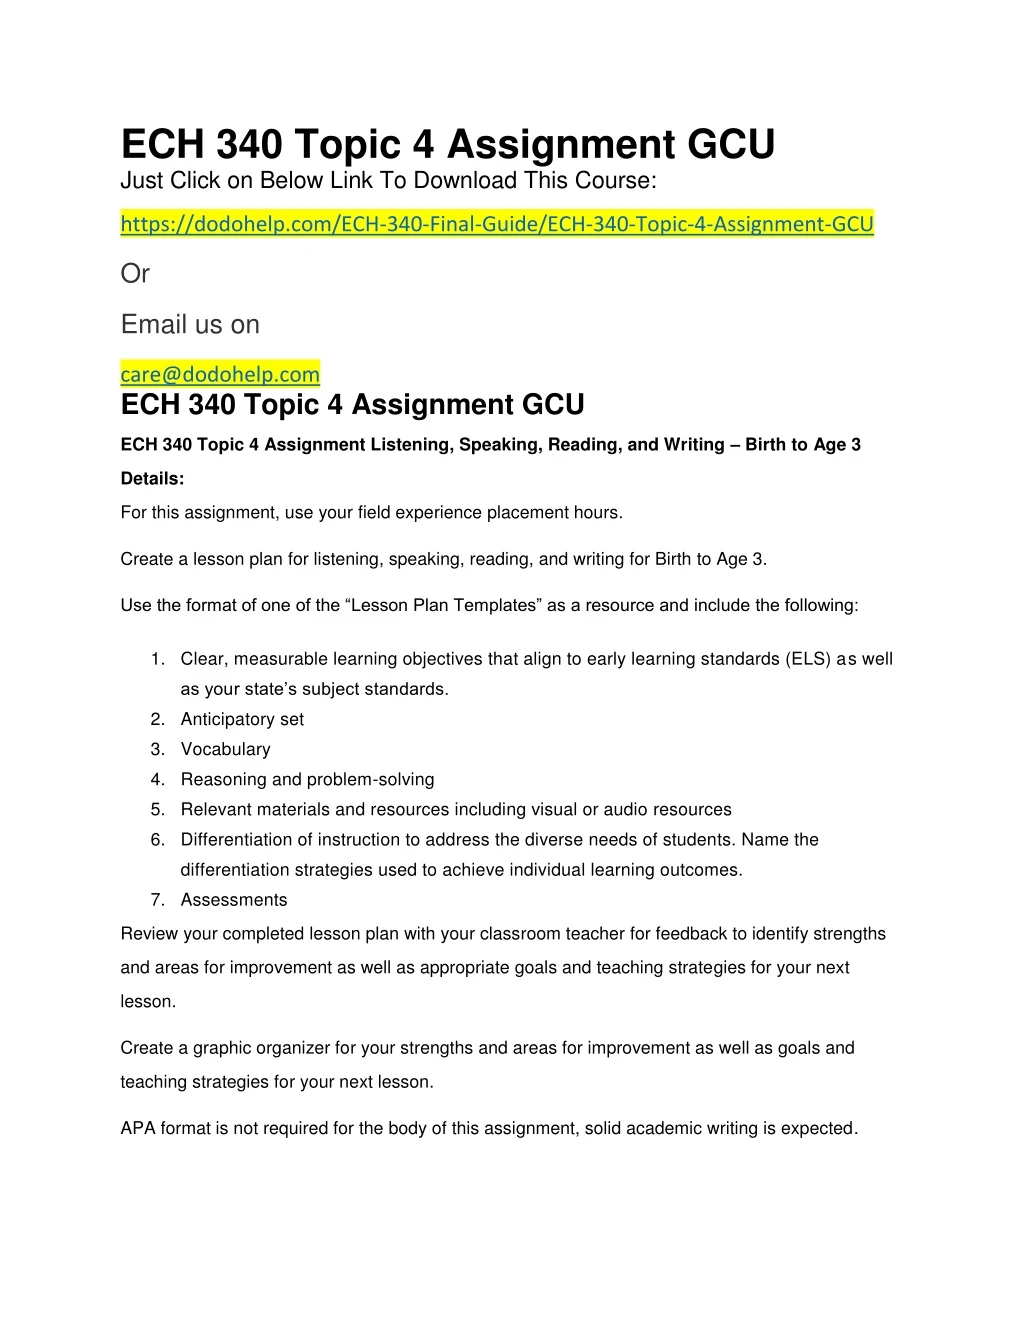 ech 340 topic 4 assignment gcu just click